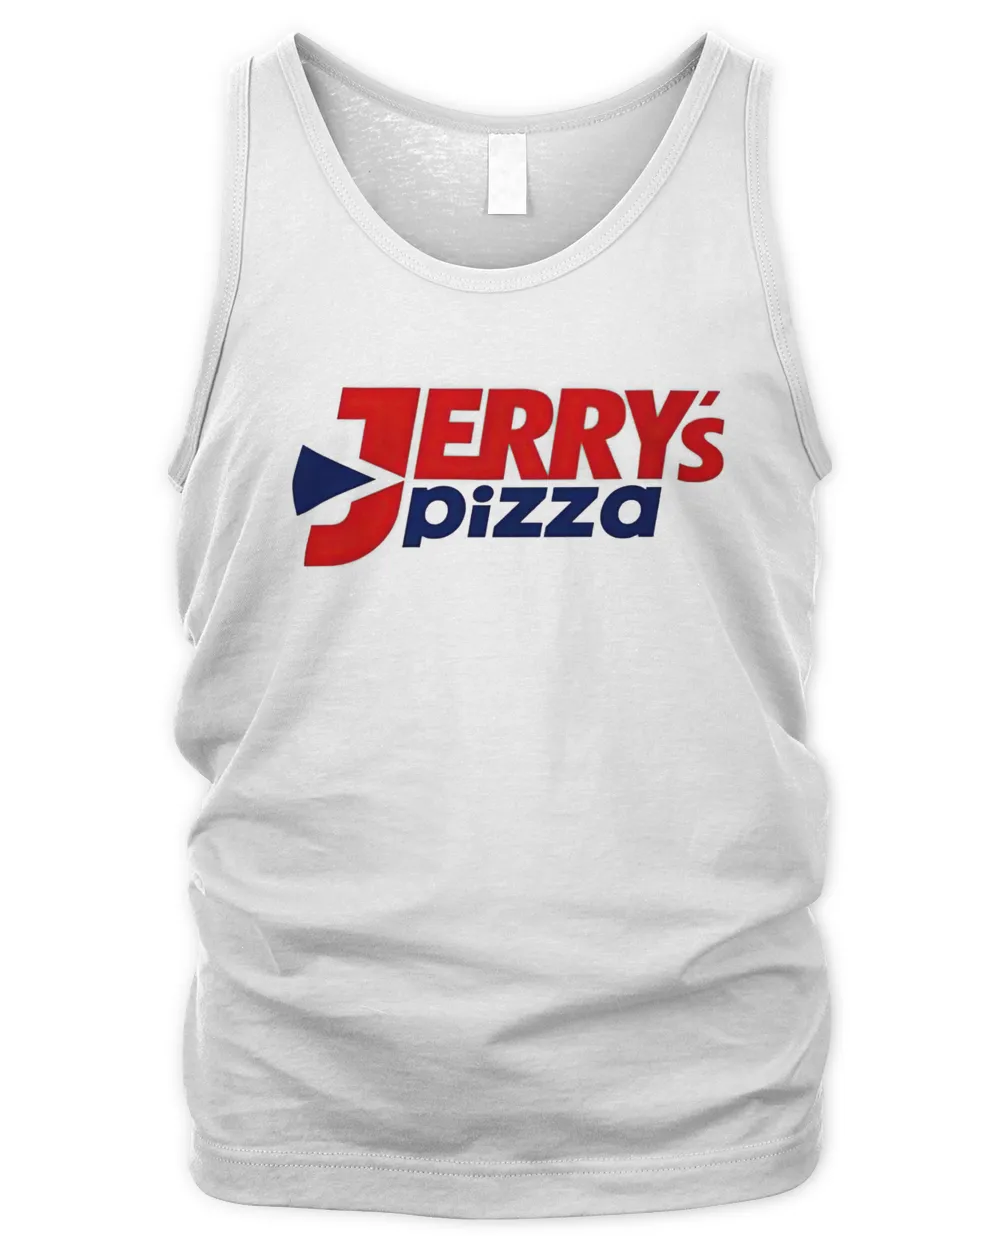 Jerry's pizza shirt